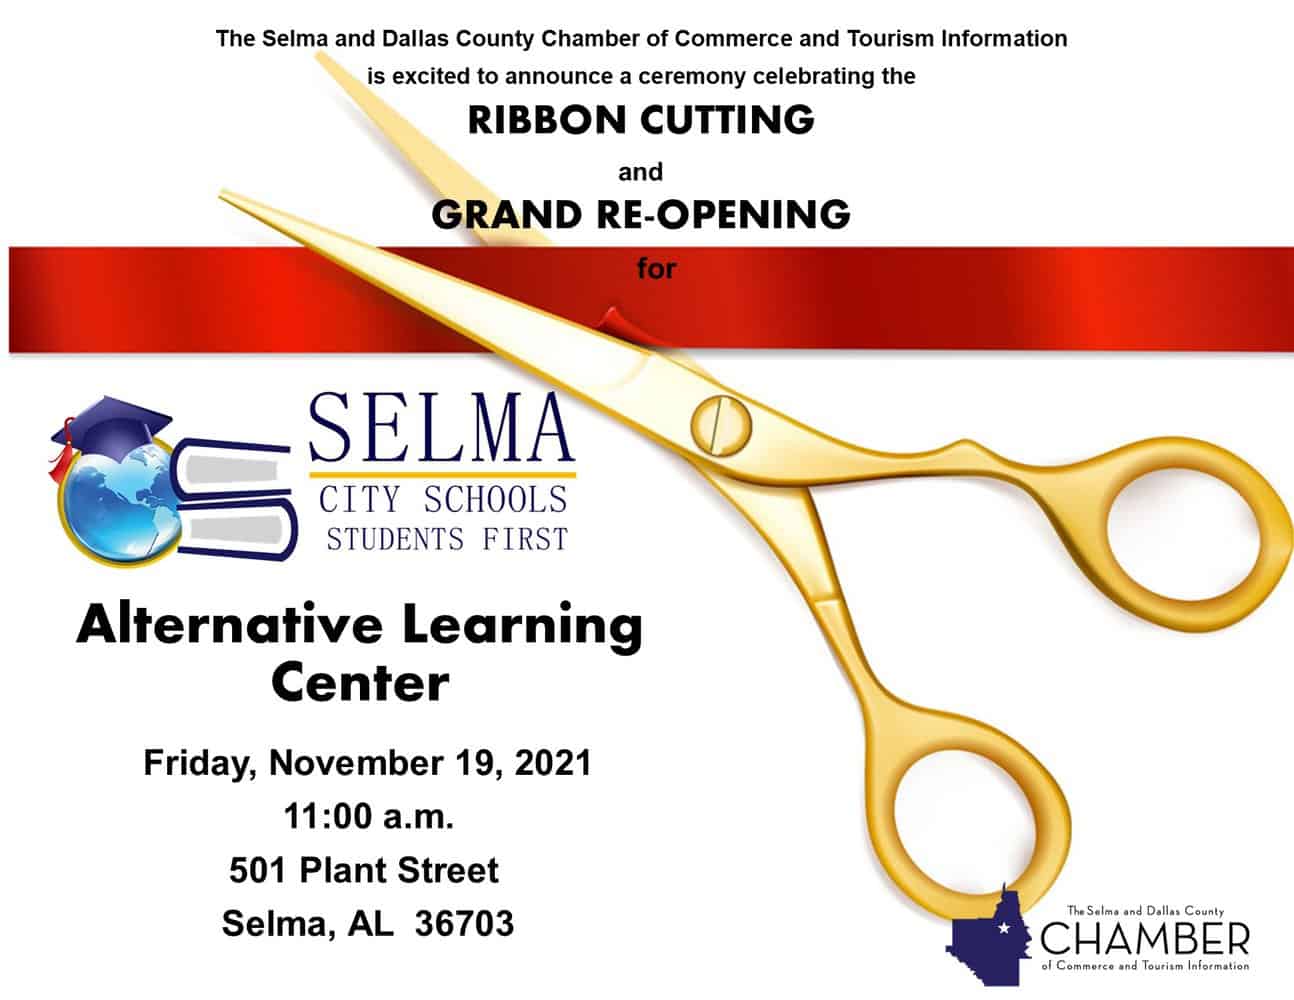 Selma_City_Schools_ALC_Grand_Re-Opening_Ribbon_Cutting_Celebration.jpg